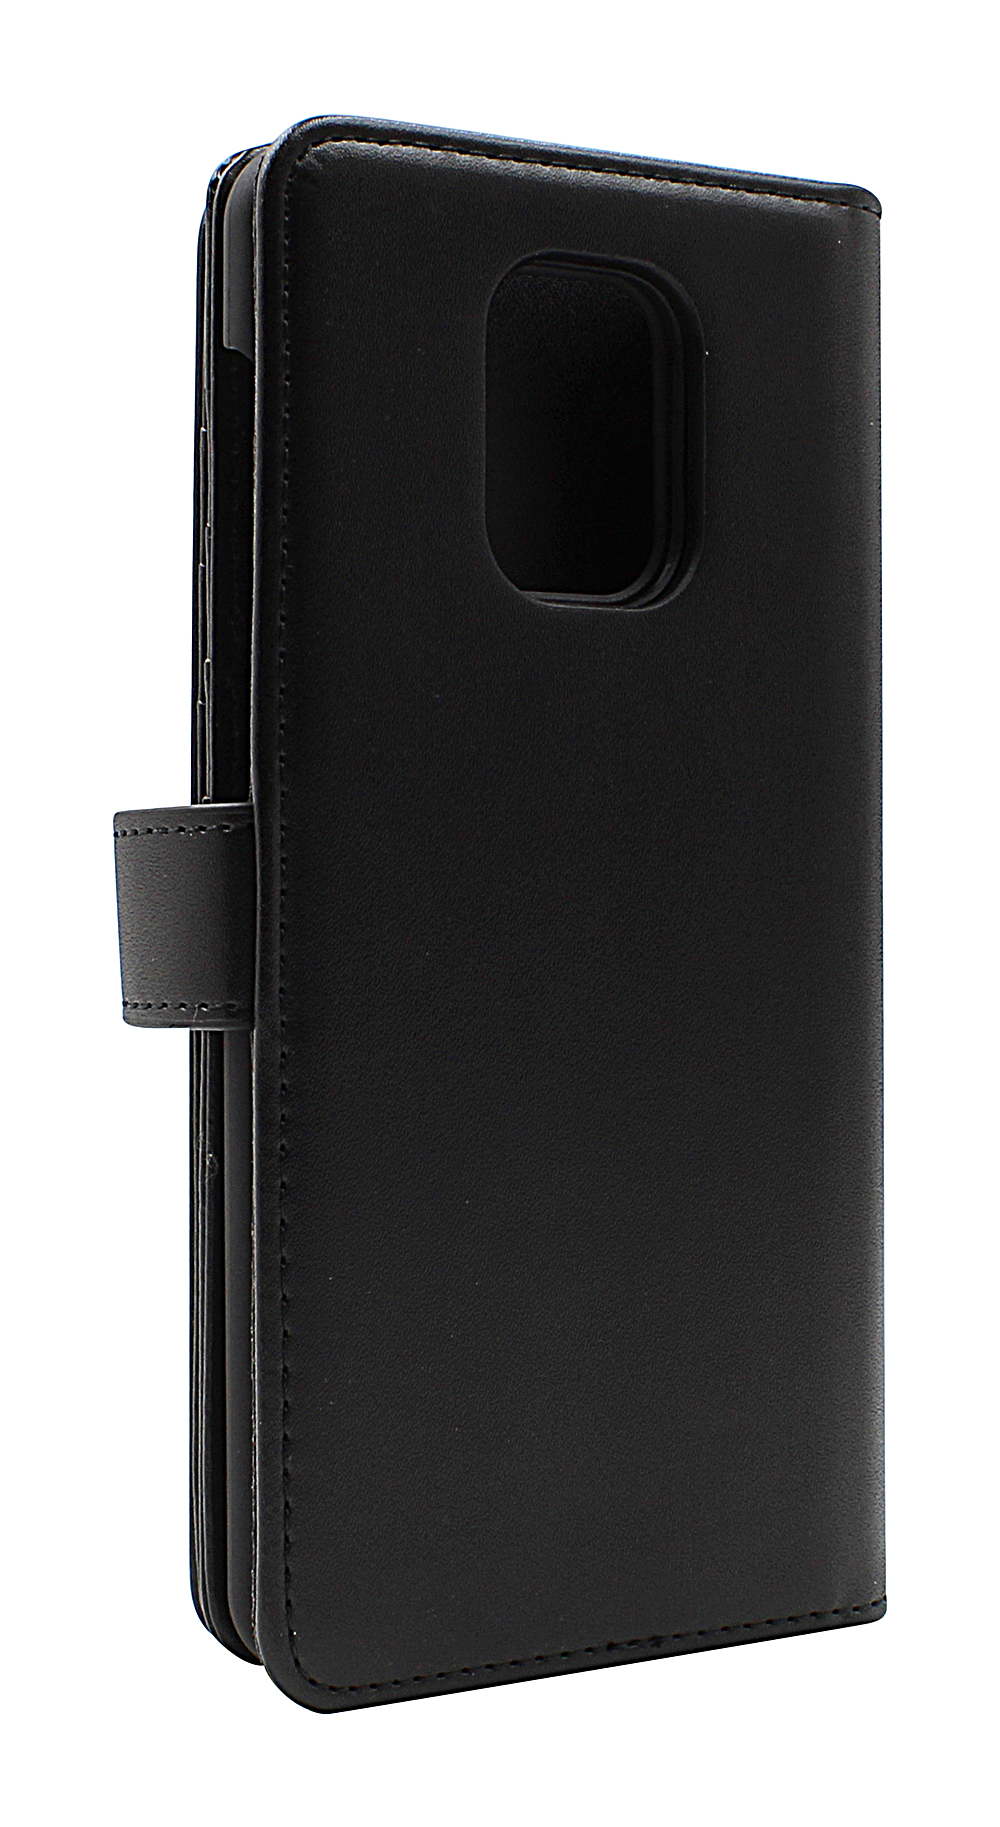 Skimblocker XL Magnet Wallet Xiaomi Redmi Note 9s / Note 9 Pro